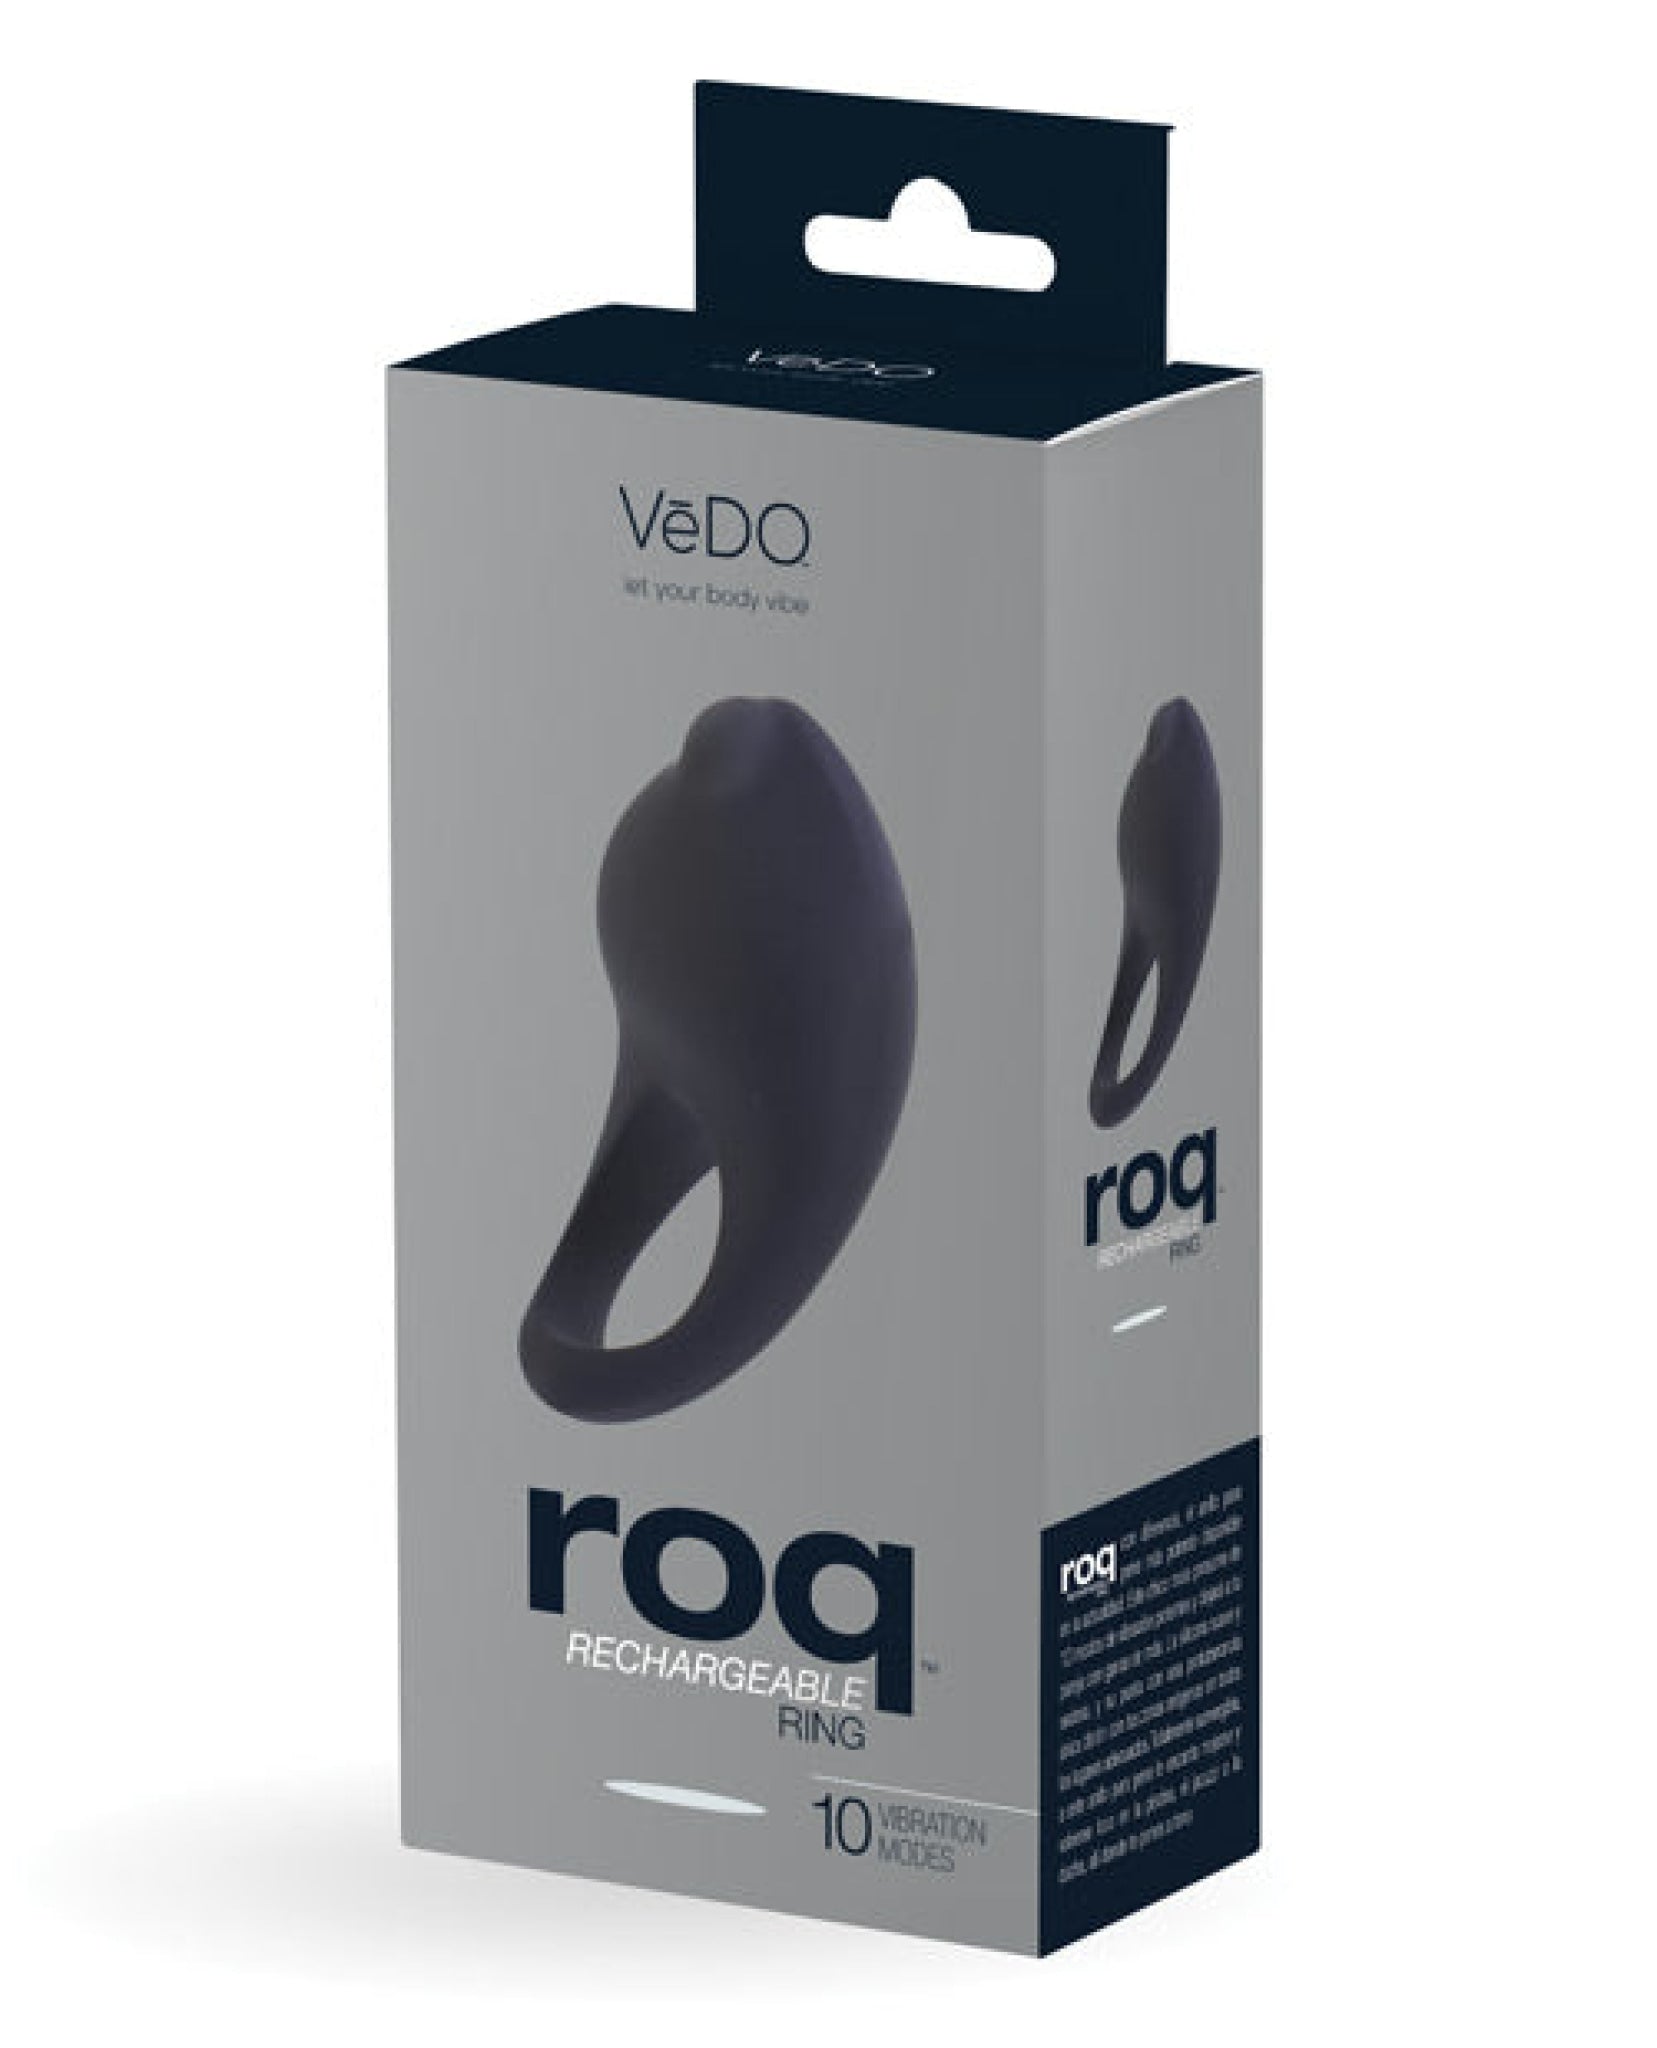 Vedo Roq Rechargeable Ring - Black VēDO